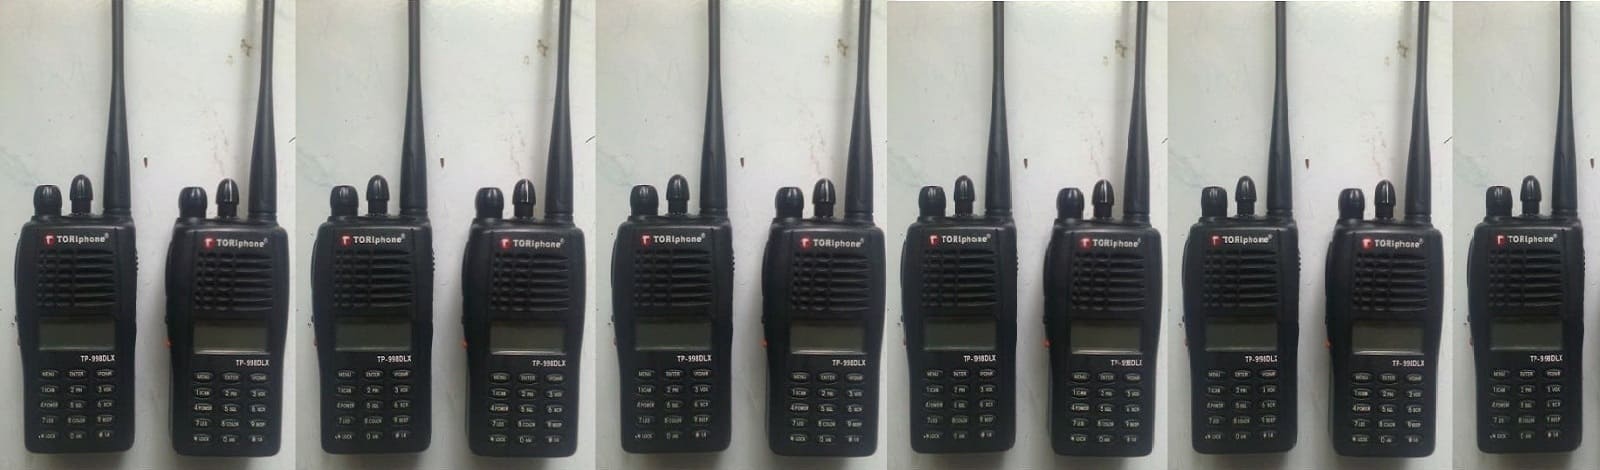 HT Toriphone TP 98 DLX | Sewa HT Krukut, Depok, Jawa Barat | Rental Handy Talky Depok Murah